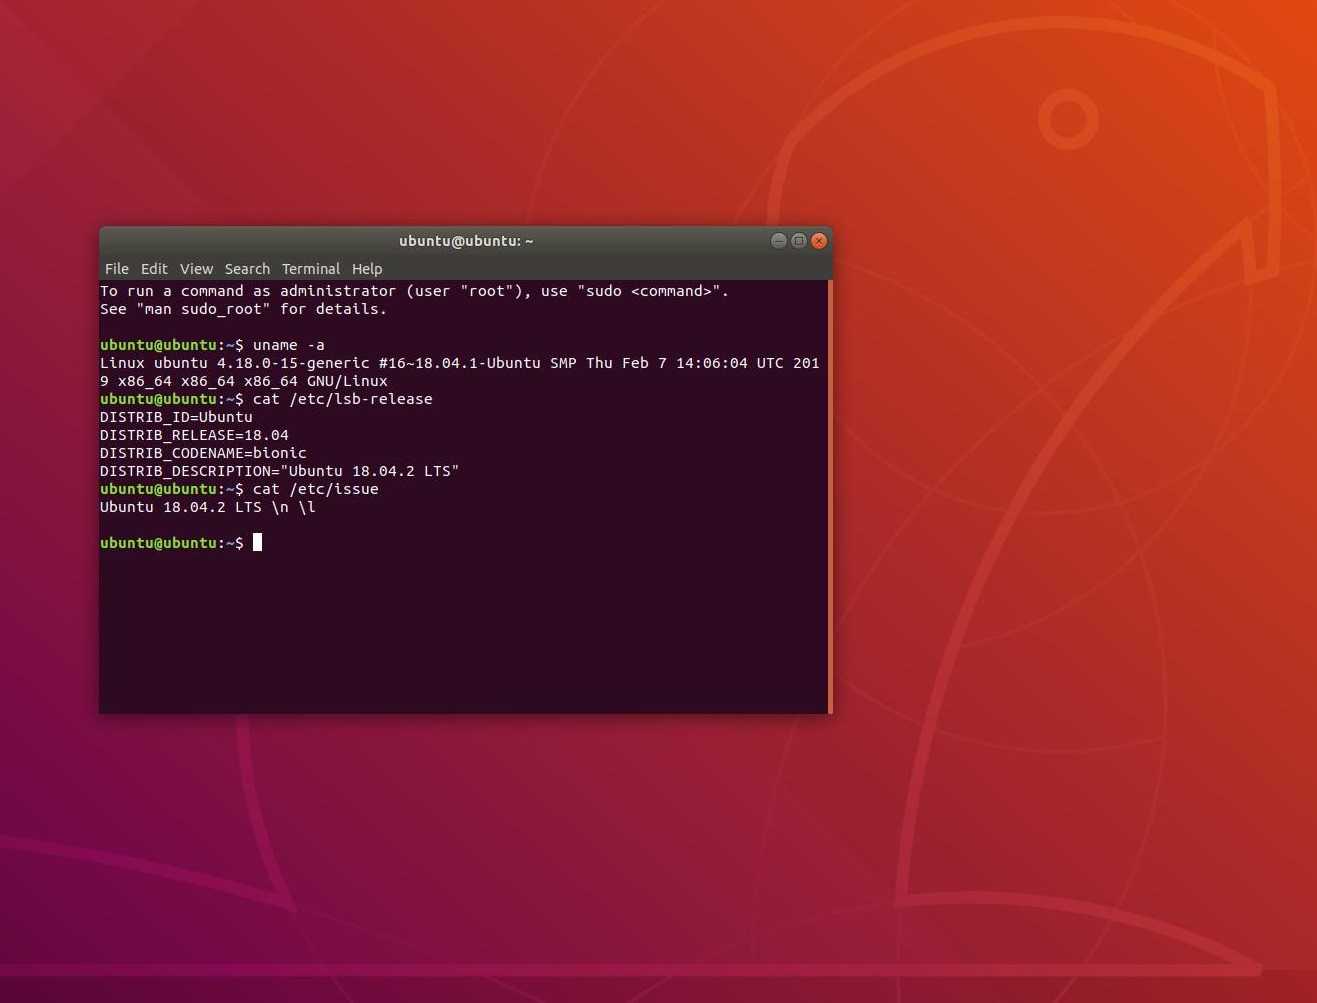 Uname linux. Ubuntu 2. Ubuntu 18.04 LTS. Ubuntu root. Ubuntu 18 LTS.